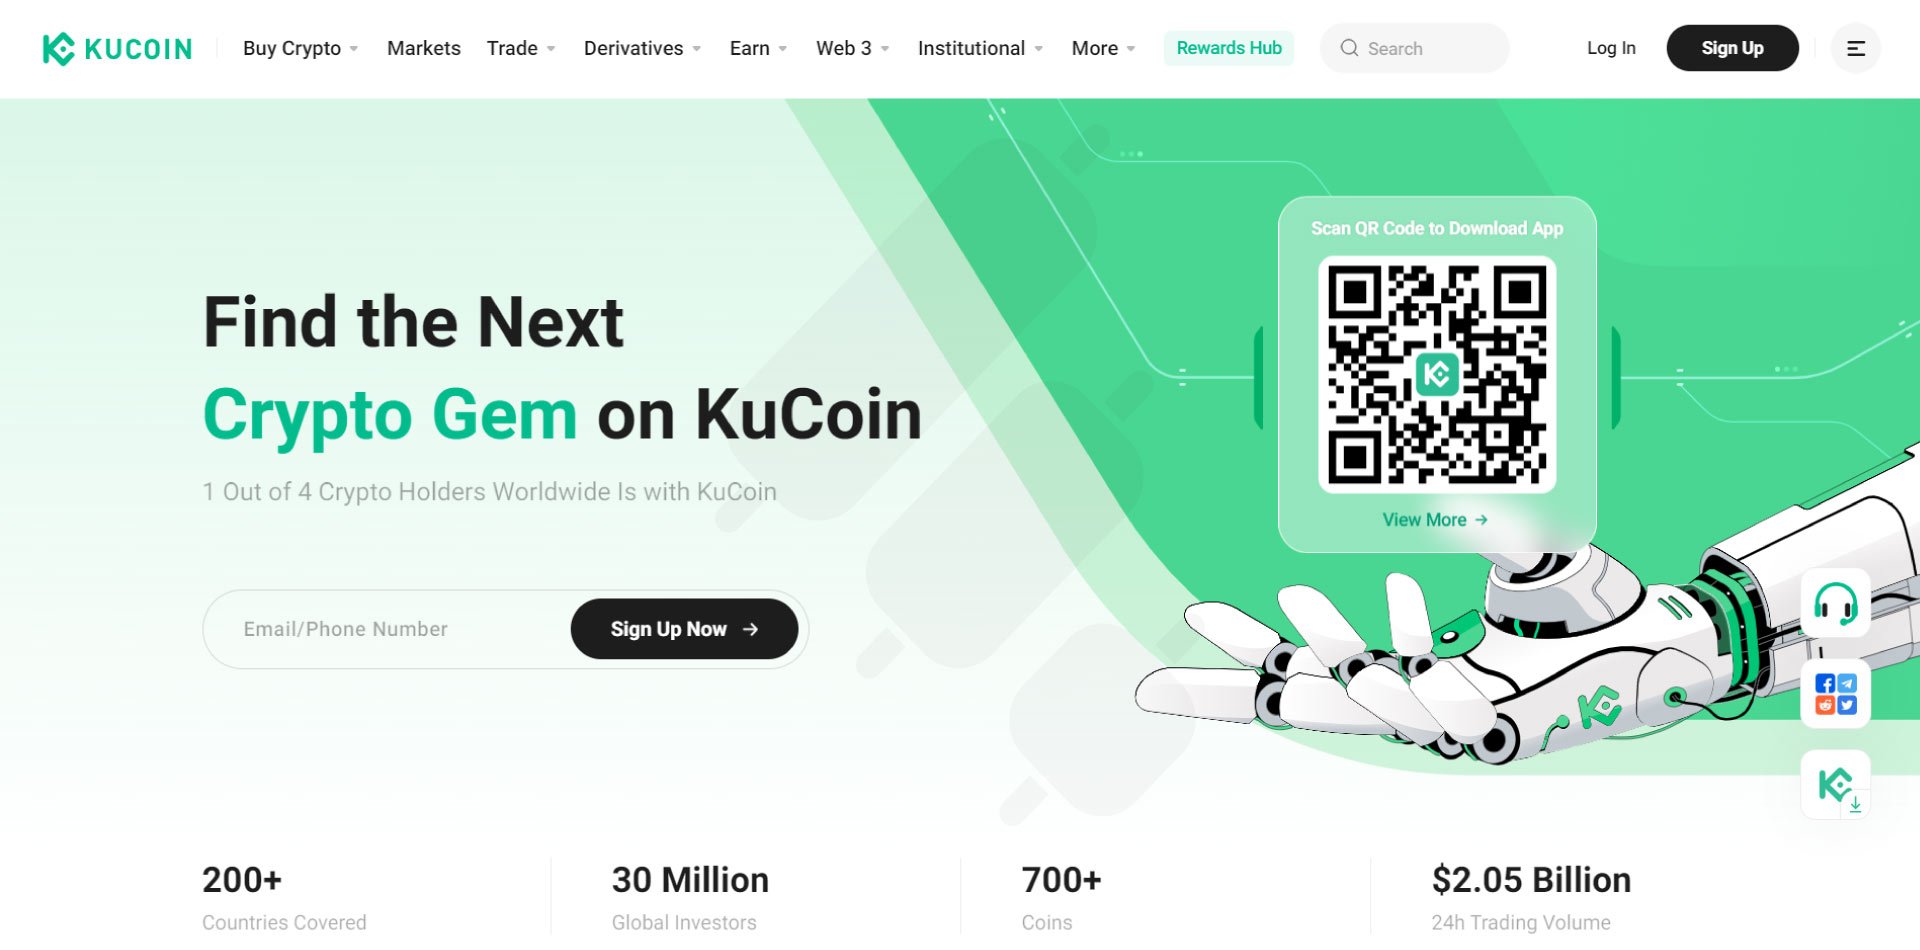 KuCoin - Basic Grid Bots and Copy Trading